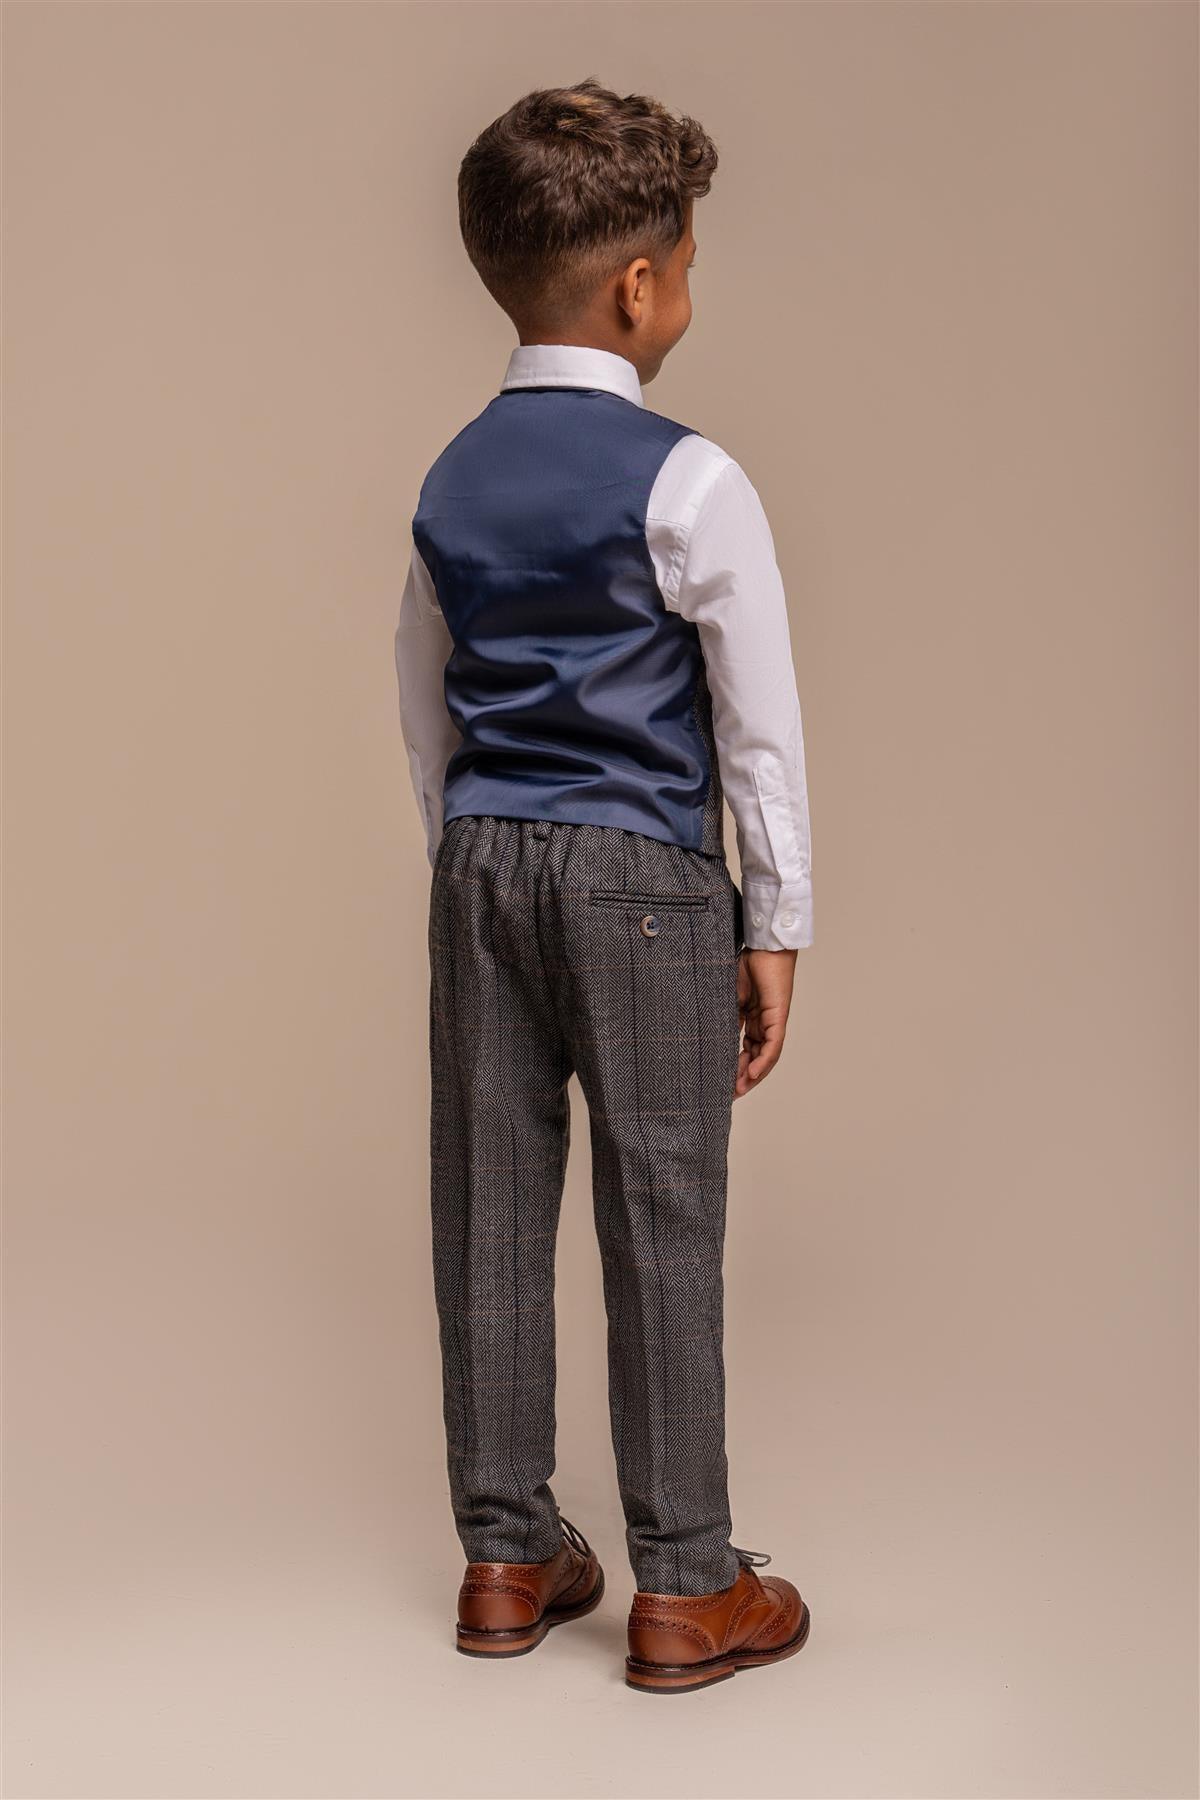 Albert Grey Tweed Check Boys Suit